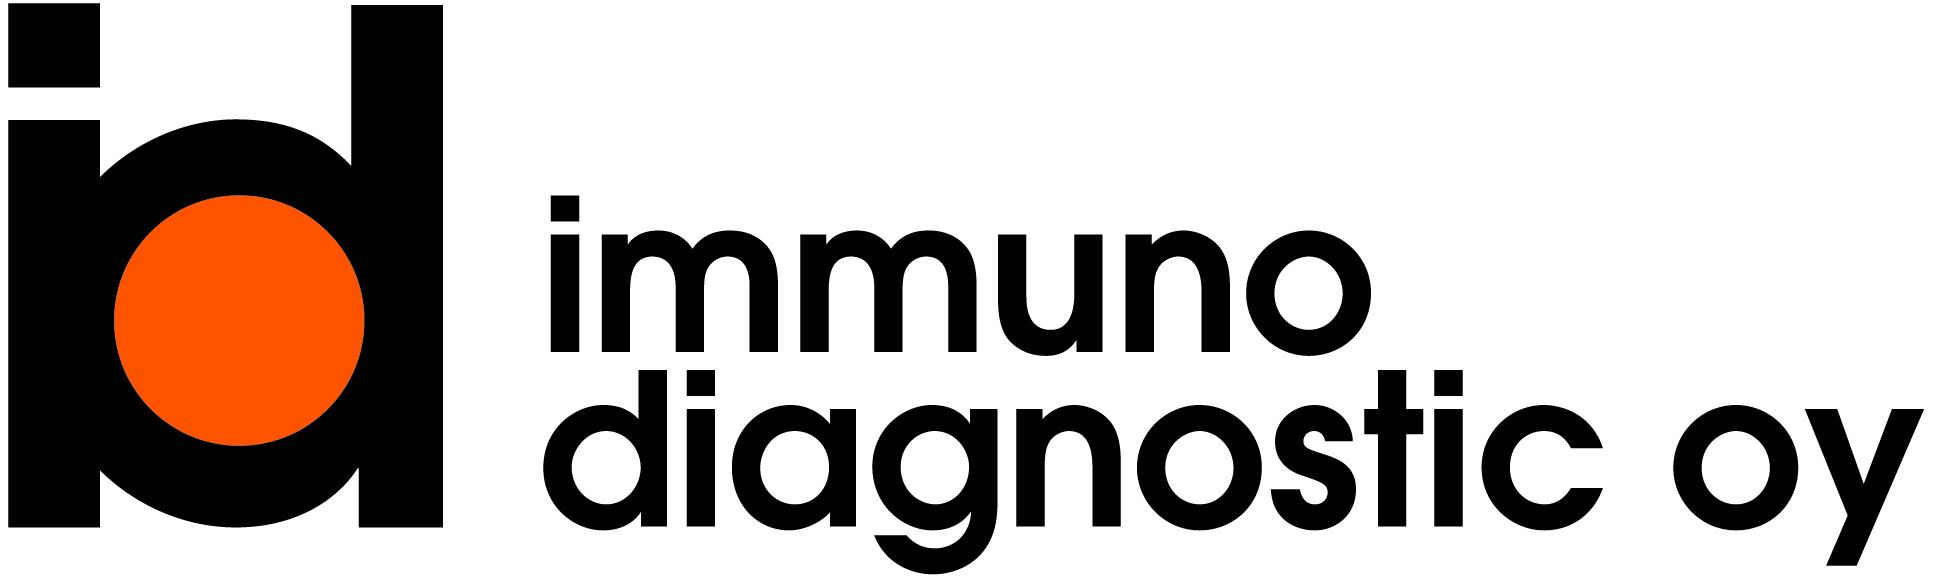 Immuno Diagnostic Oy logo